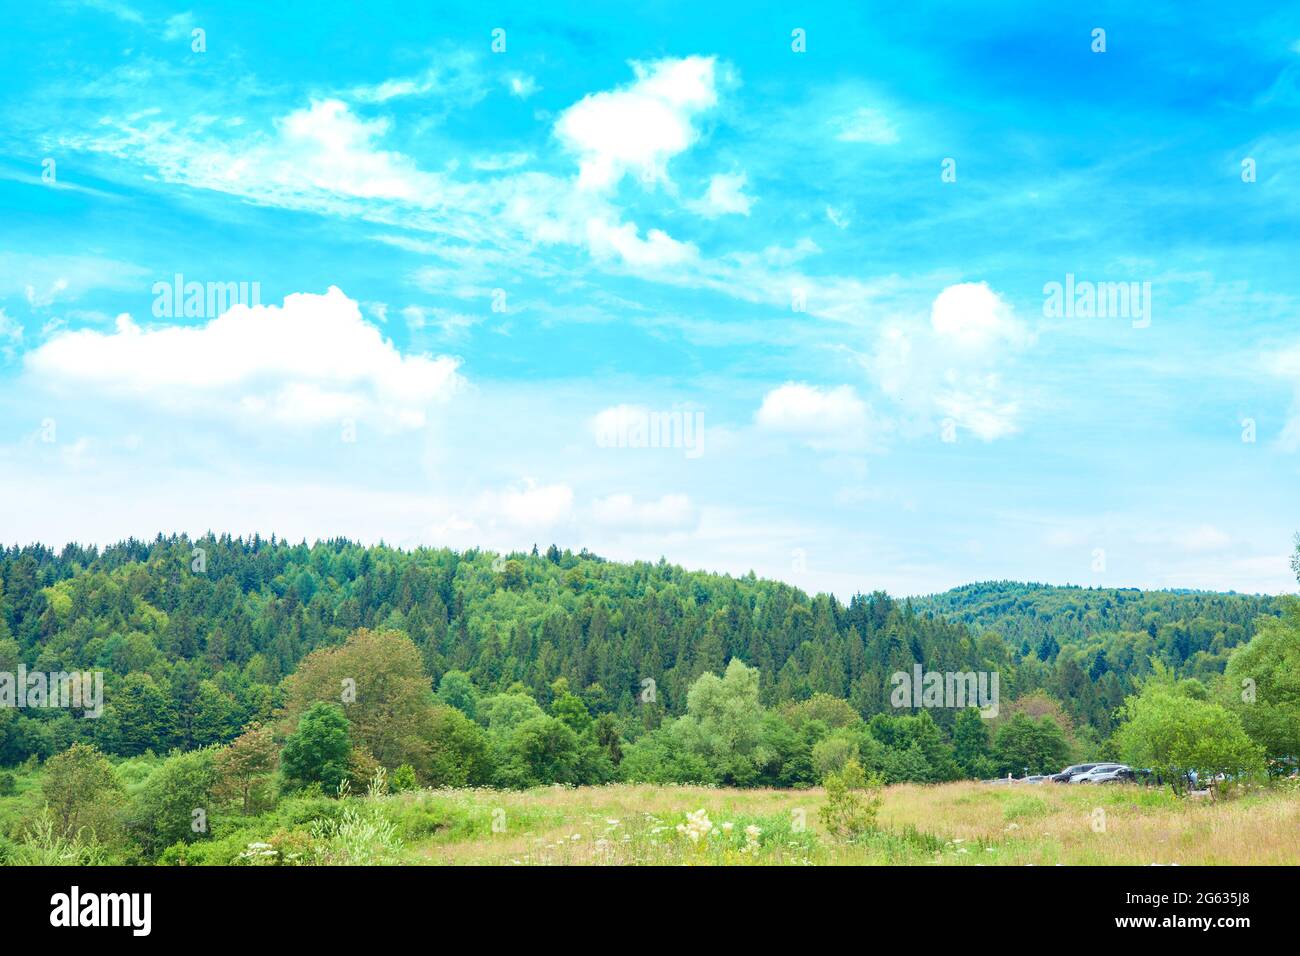 Summer landscape green field, mountains and forest by blue sky. Scenery of Ukrainian Carpathians in Skole, Lviv region at sun light day Stock Photo